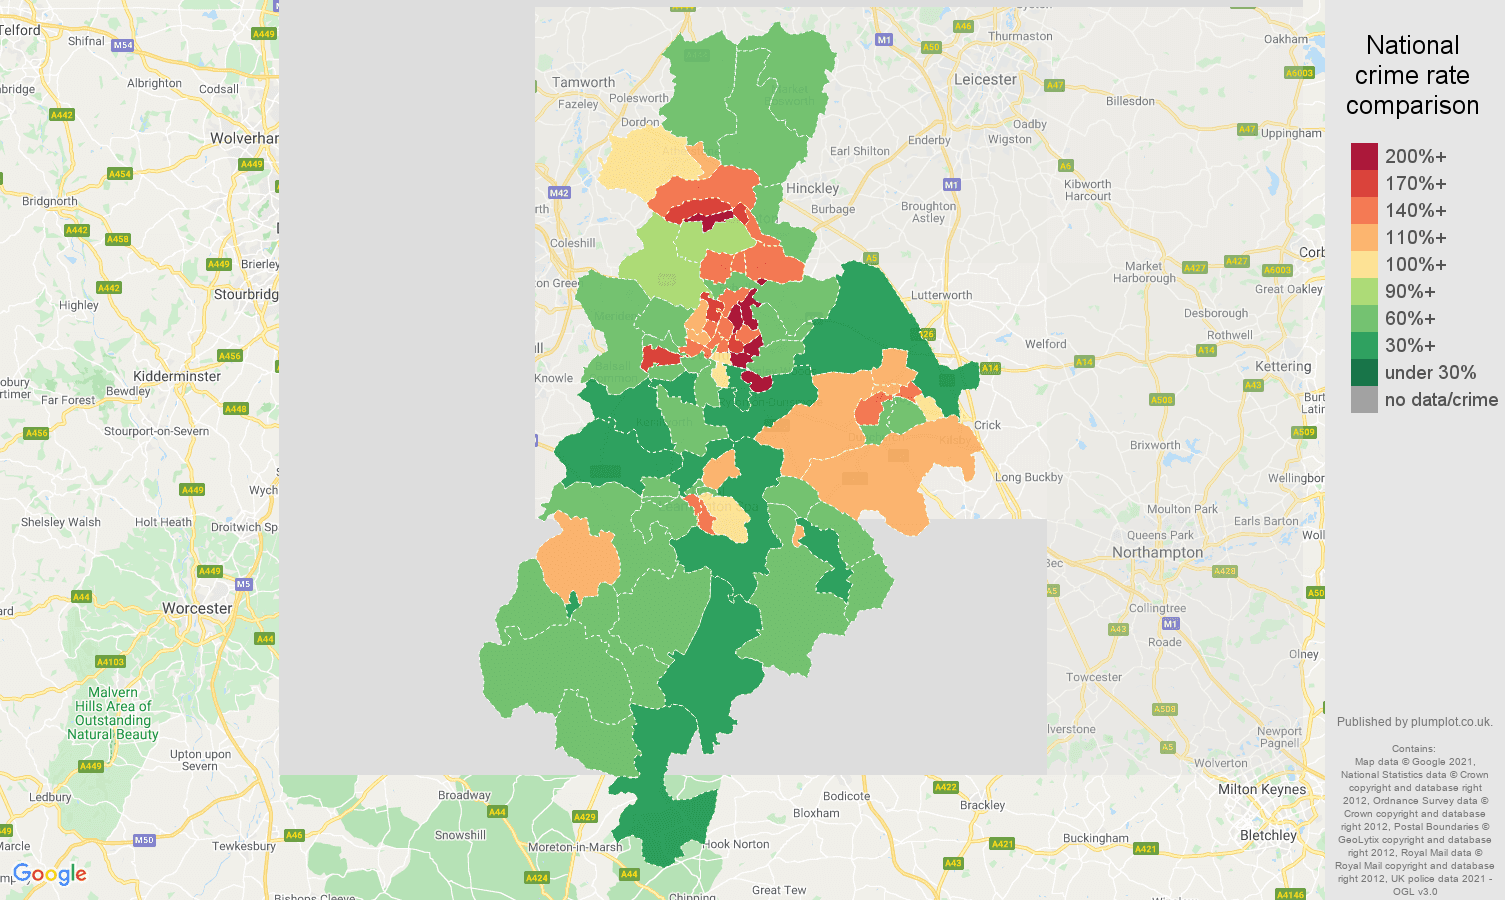 Coventry violent crime rate comparison map